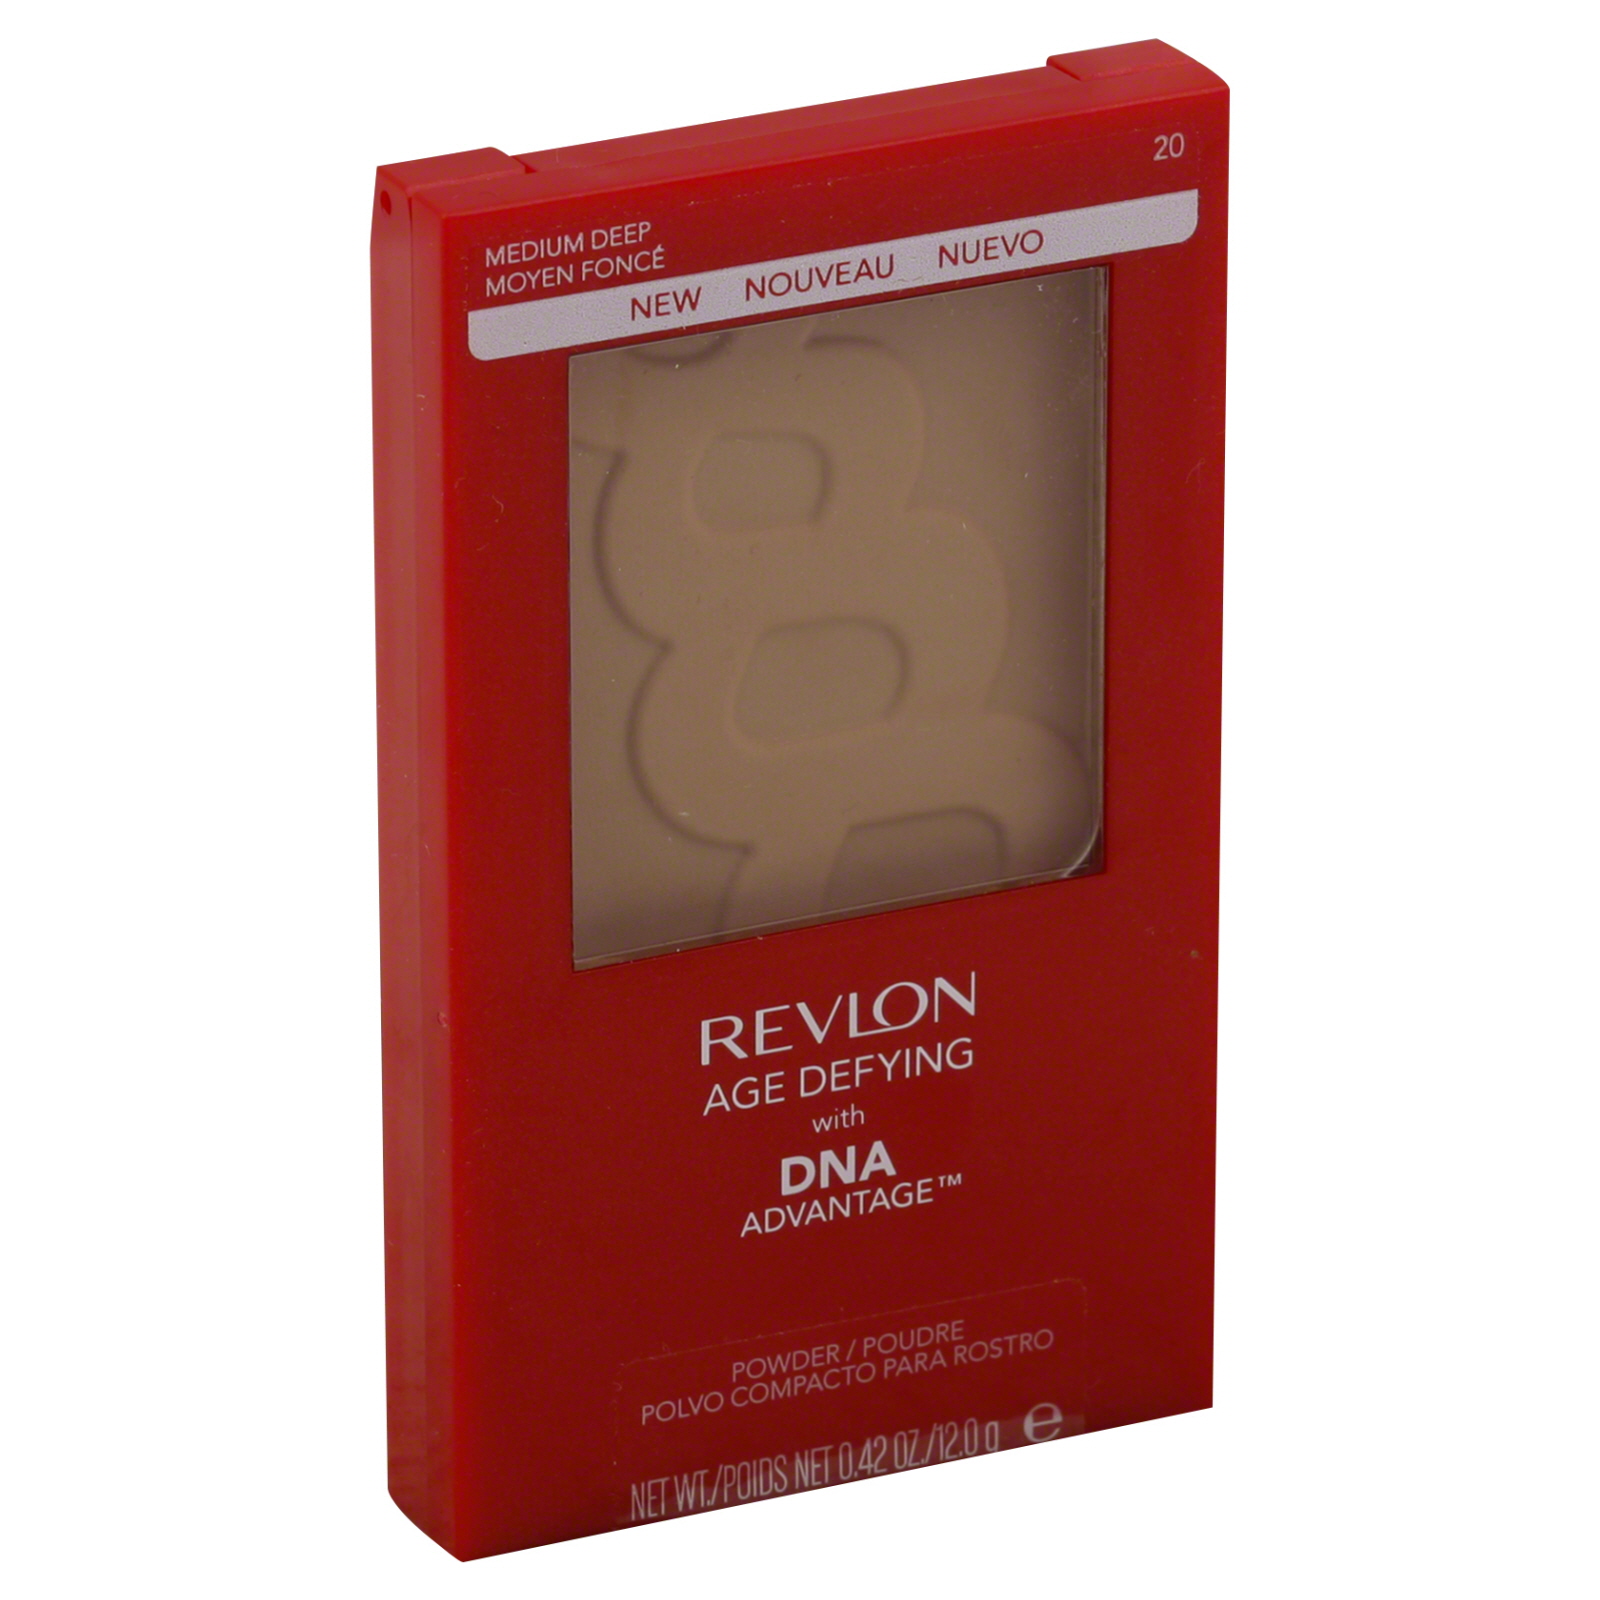 Revlon Age Defying with DNA Advantage Powder Compact Medium Deep 0.3 fl oz